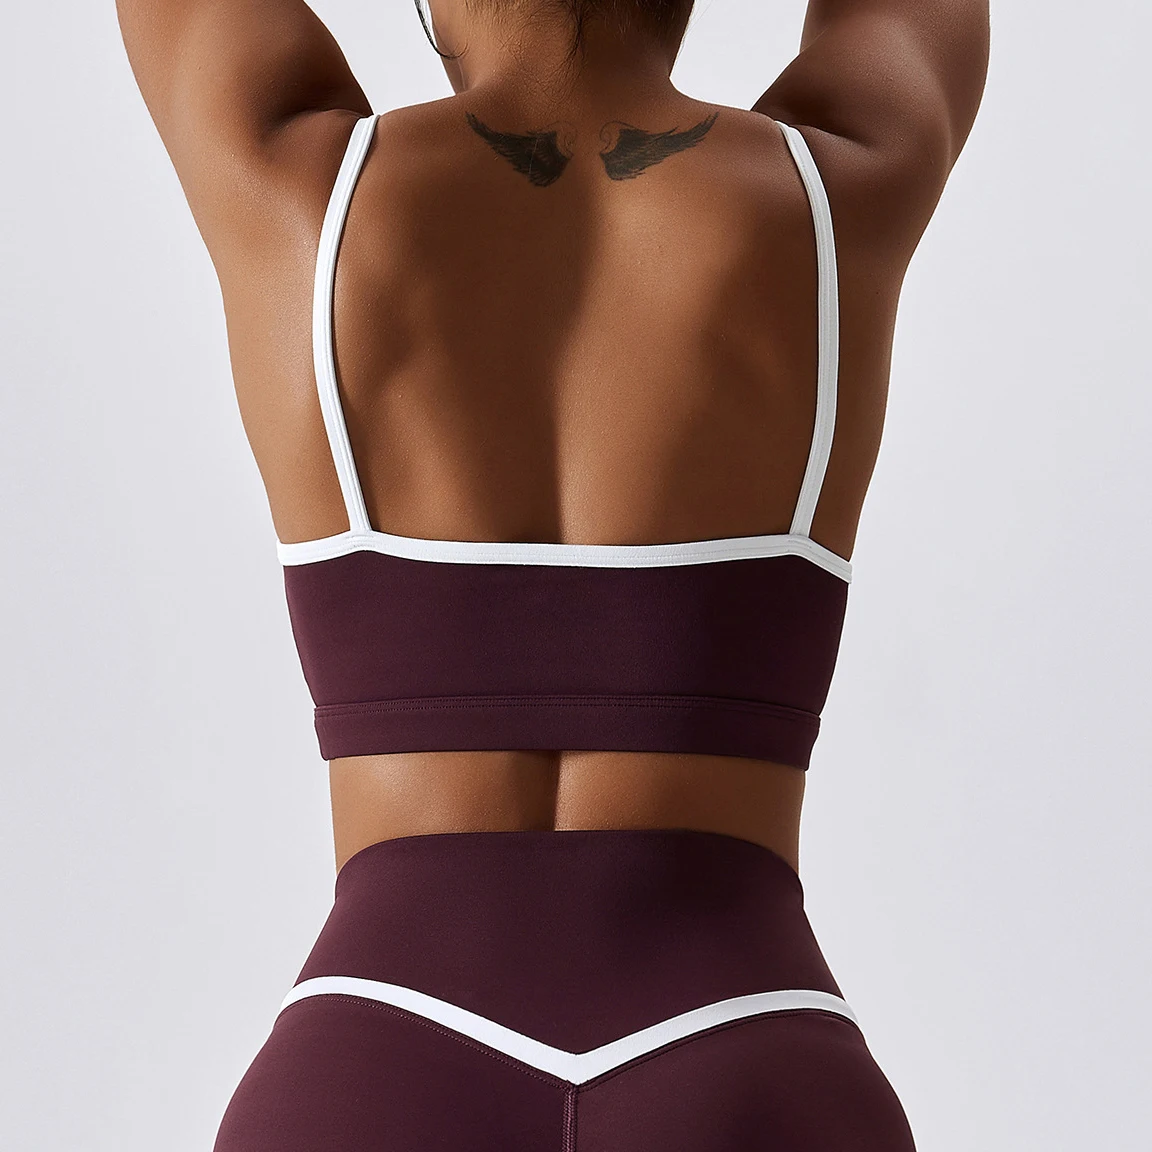 YIYI Naked Feeling High Support Yoga Bra Beauty Back Shockproof Athletic Tops Popular Fitness Bra Women Sport Bra For Gym